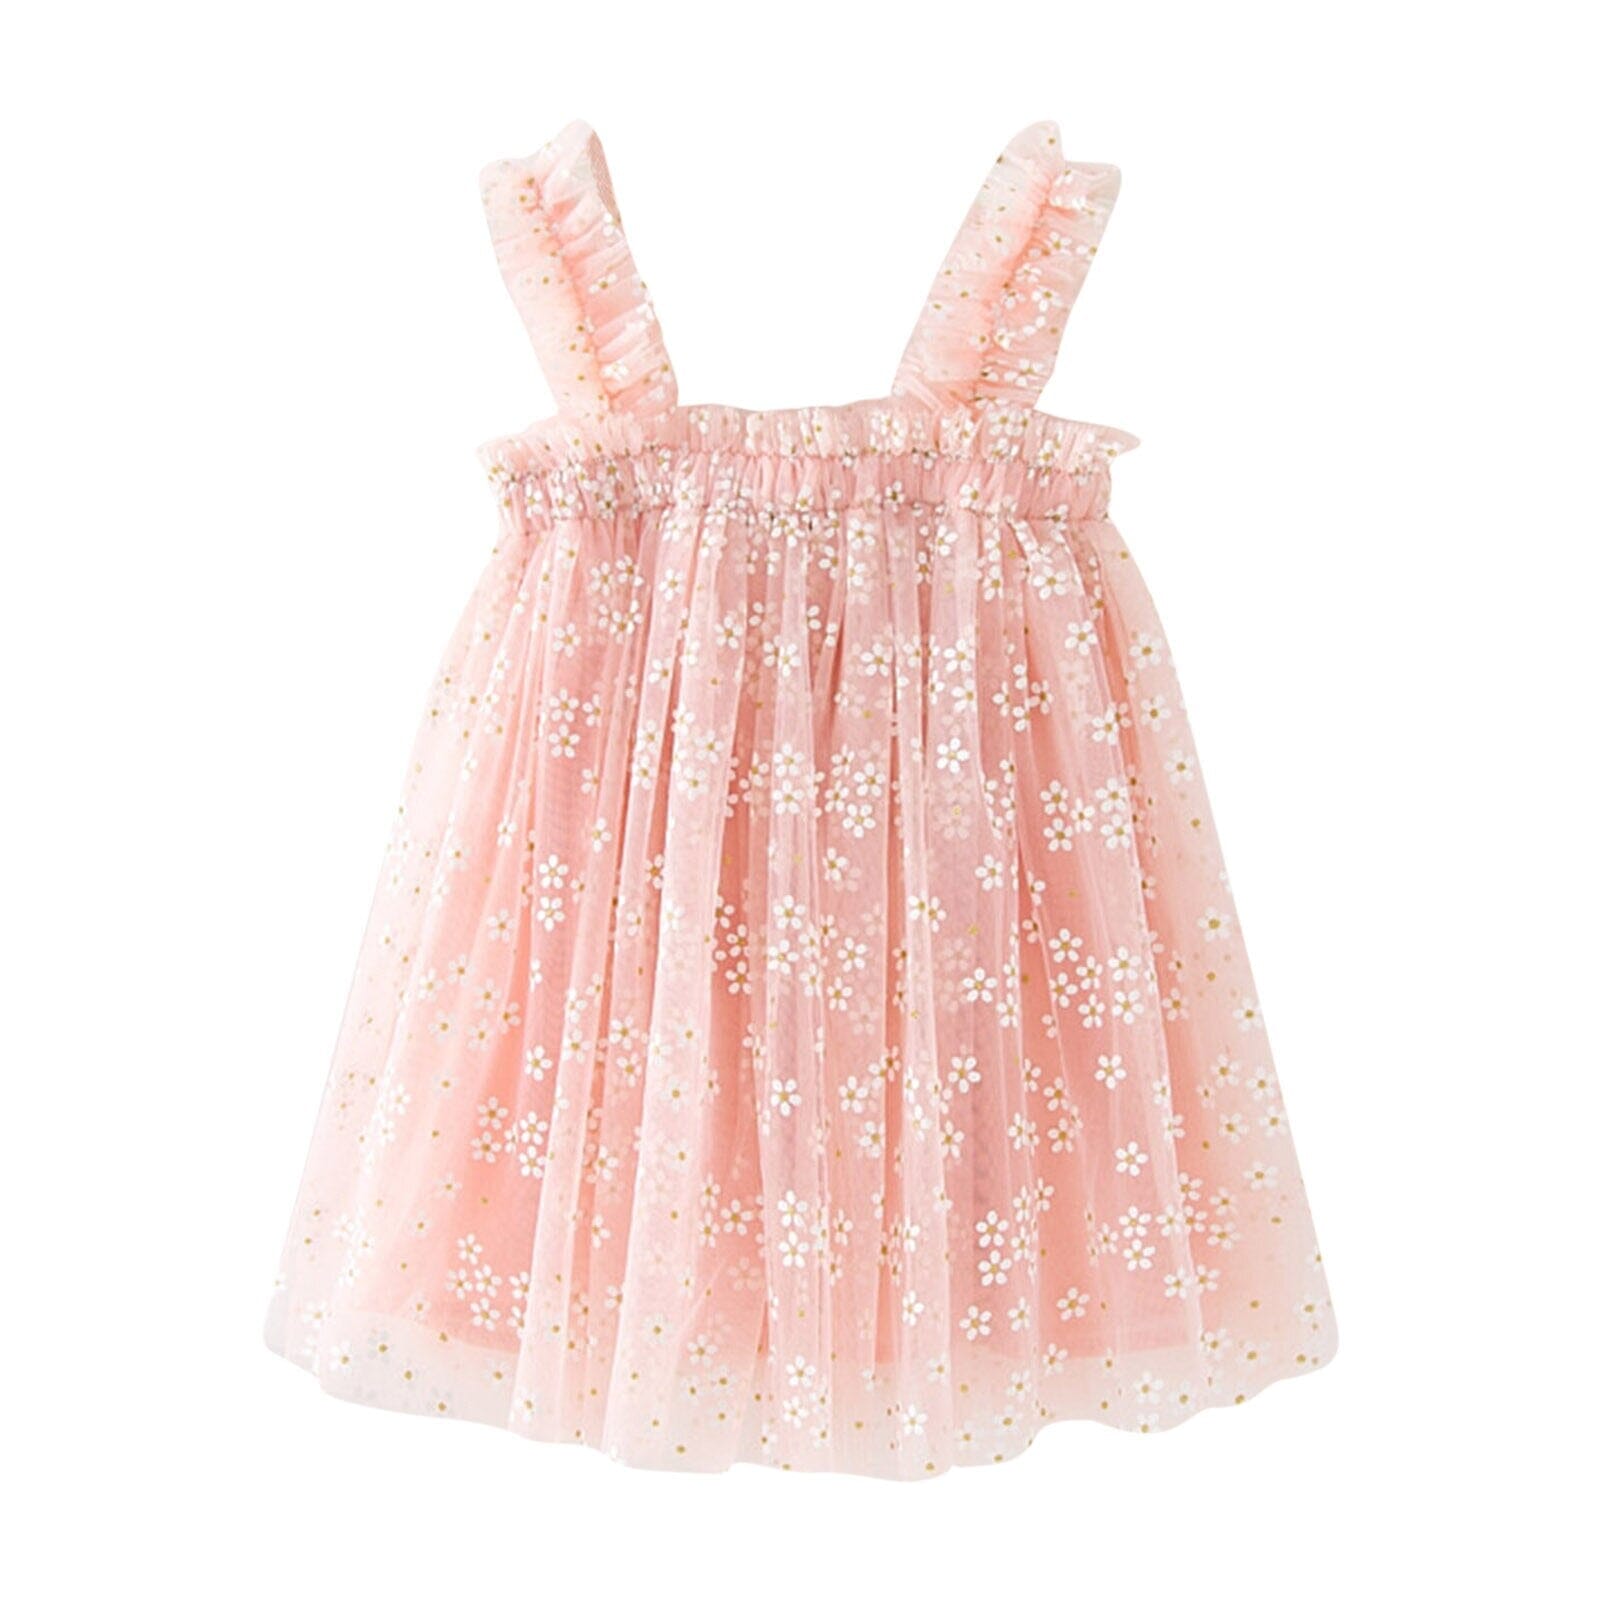 Vestido Infantil Tule Florezinhas Loja Click Certo Rosa 12-18 Meses 